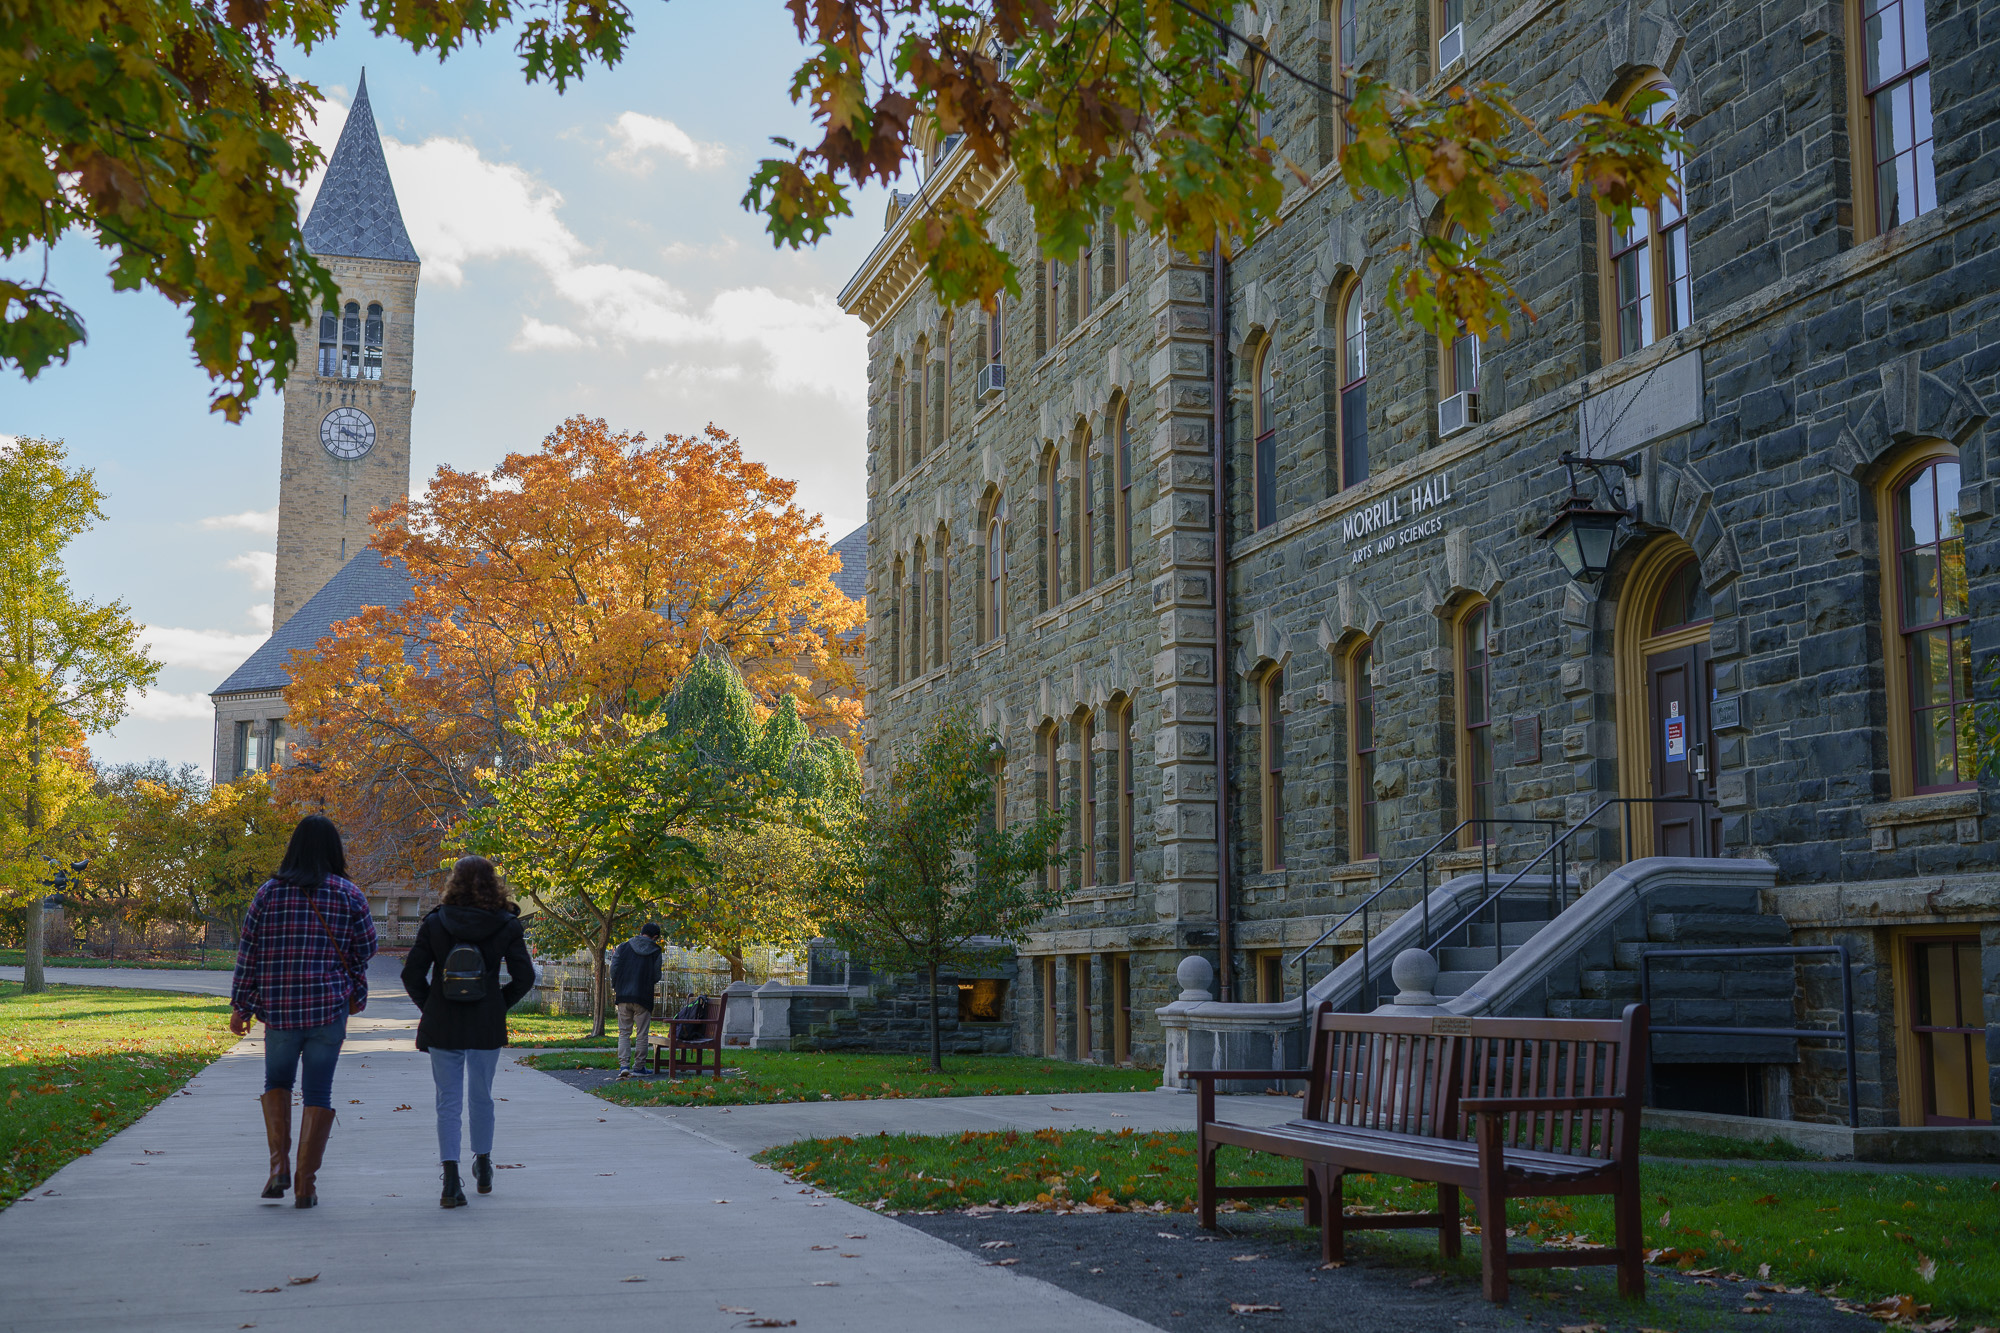 Prospective Students “Visit” Campus Through Expanded Virtual Tours